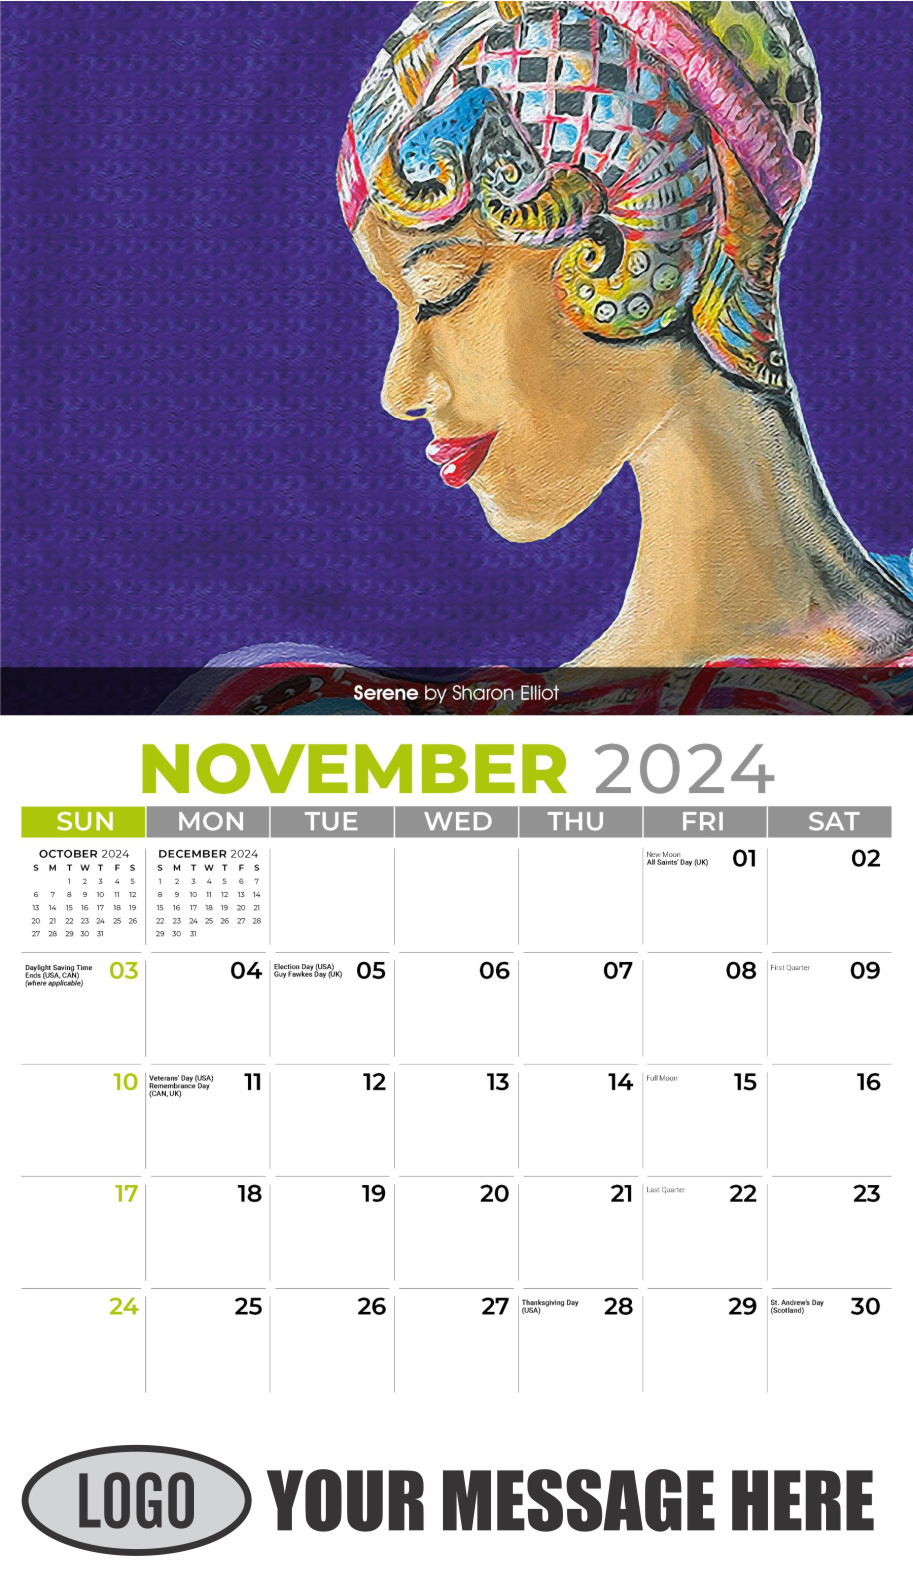 Celebration of African American Art 2024 Business Promotional Calendar - November